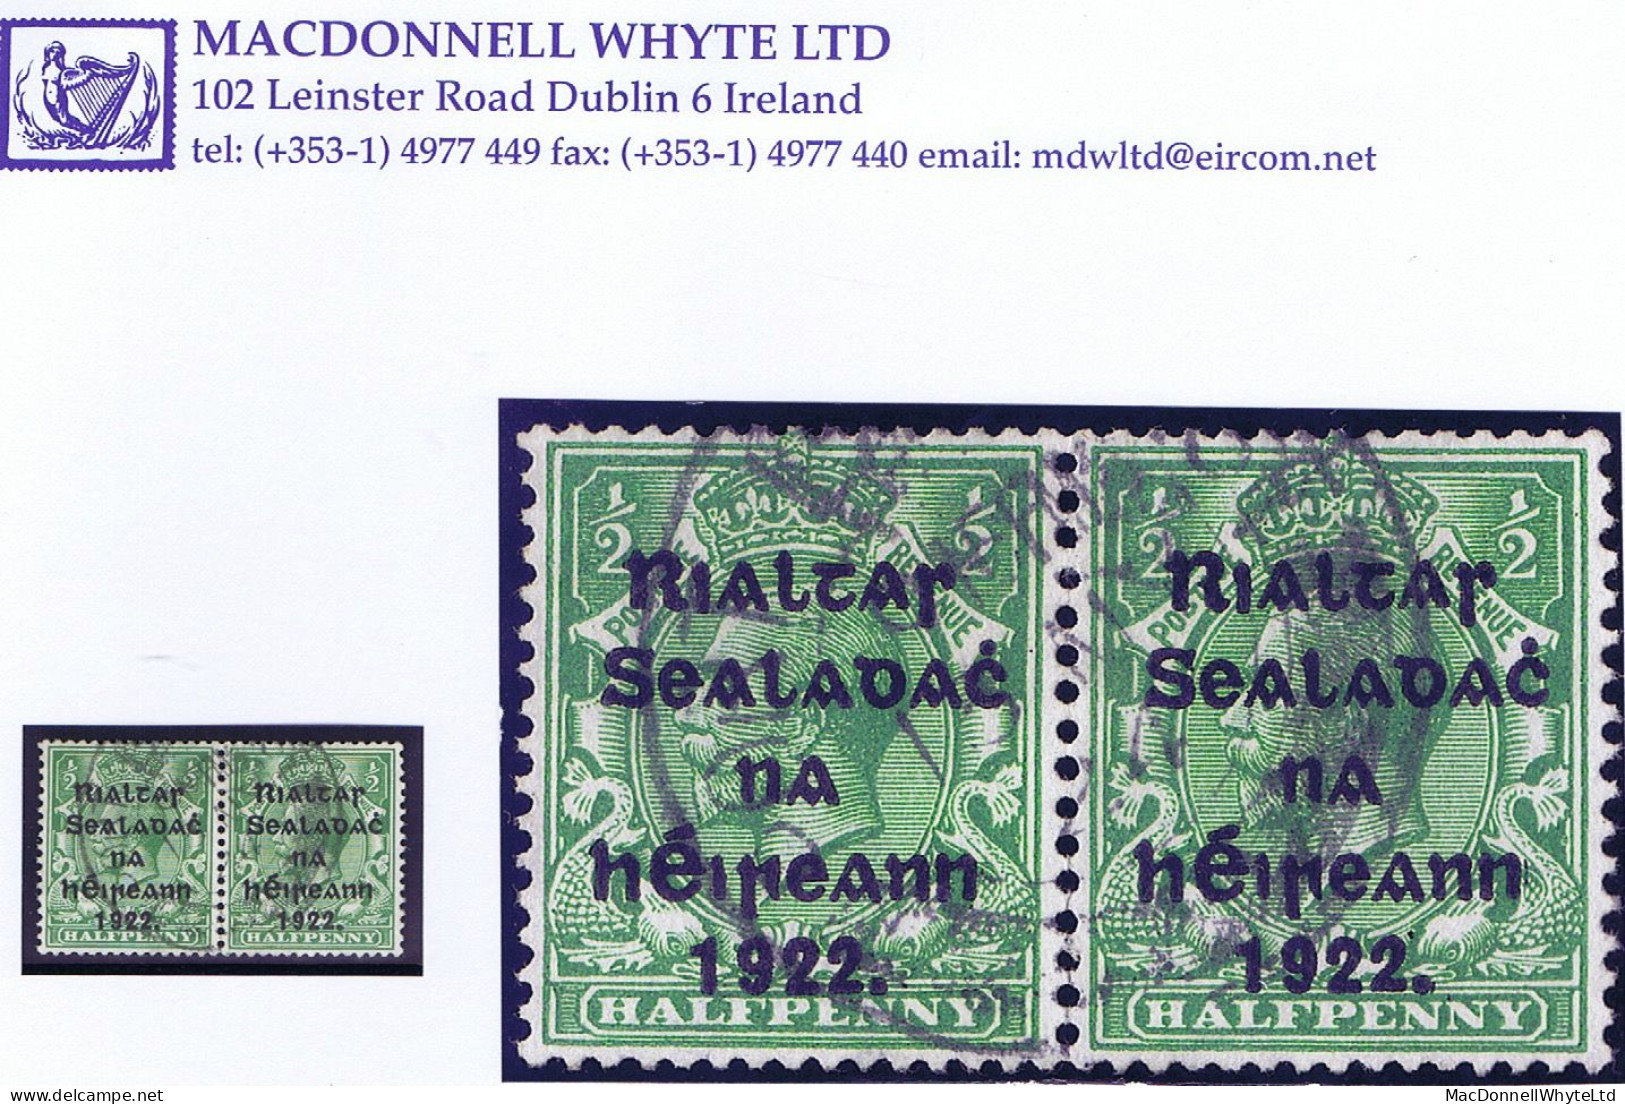 Ireland 1922 Harrison Rialtas 5-line Coils ½d Green Horizontal Pair Fine Used 1924 PORT LAOIGHISE Cds - Usati